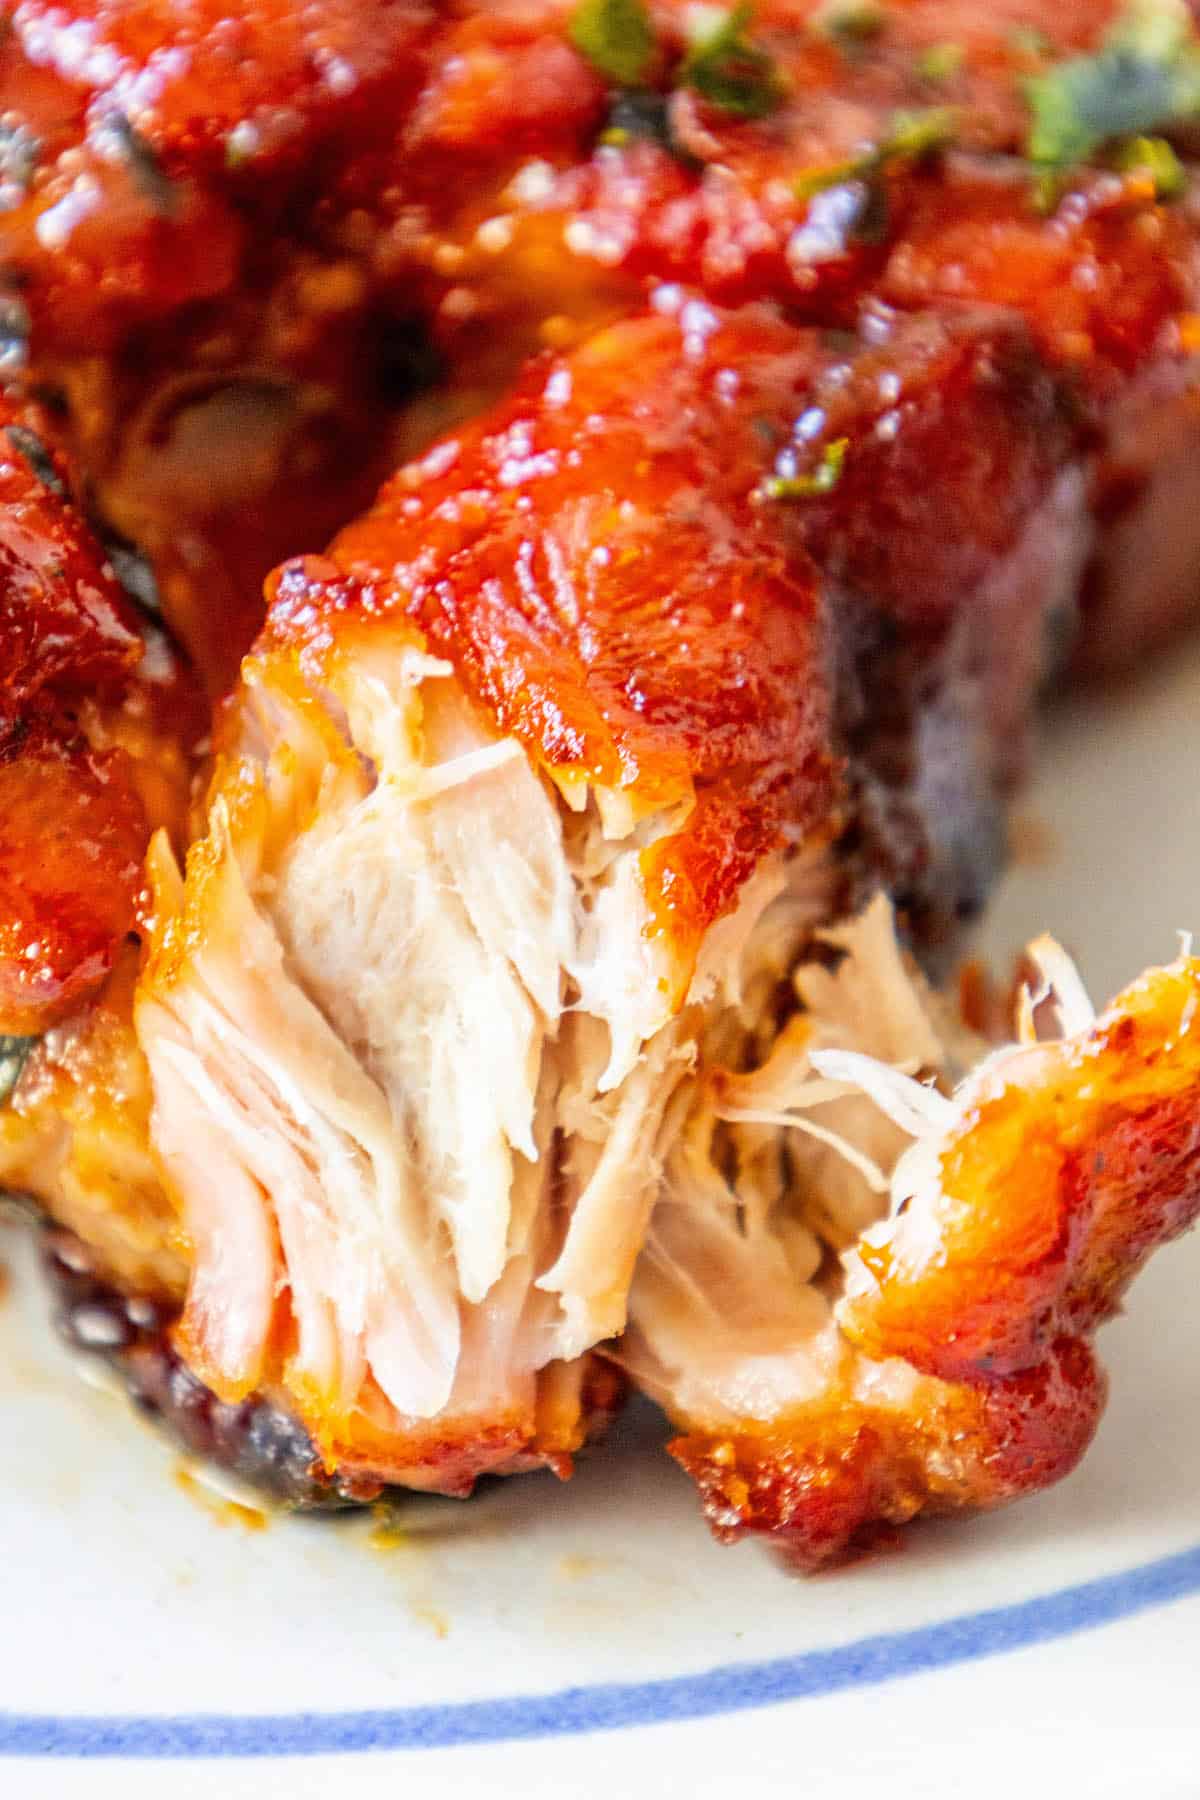 A close up of a boneless chicken on a plate.